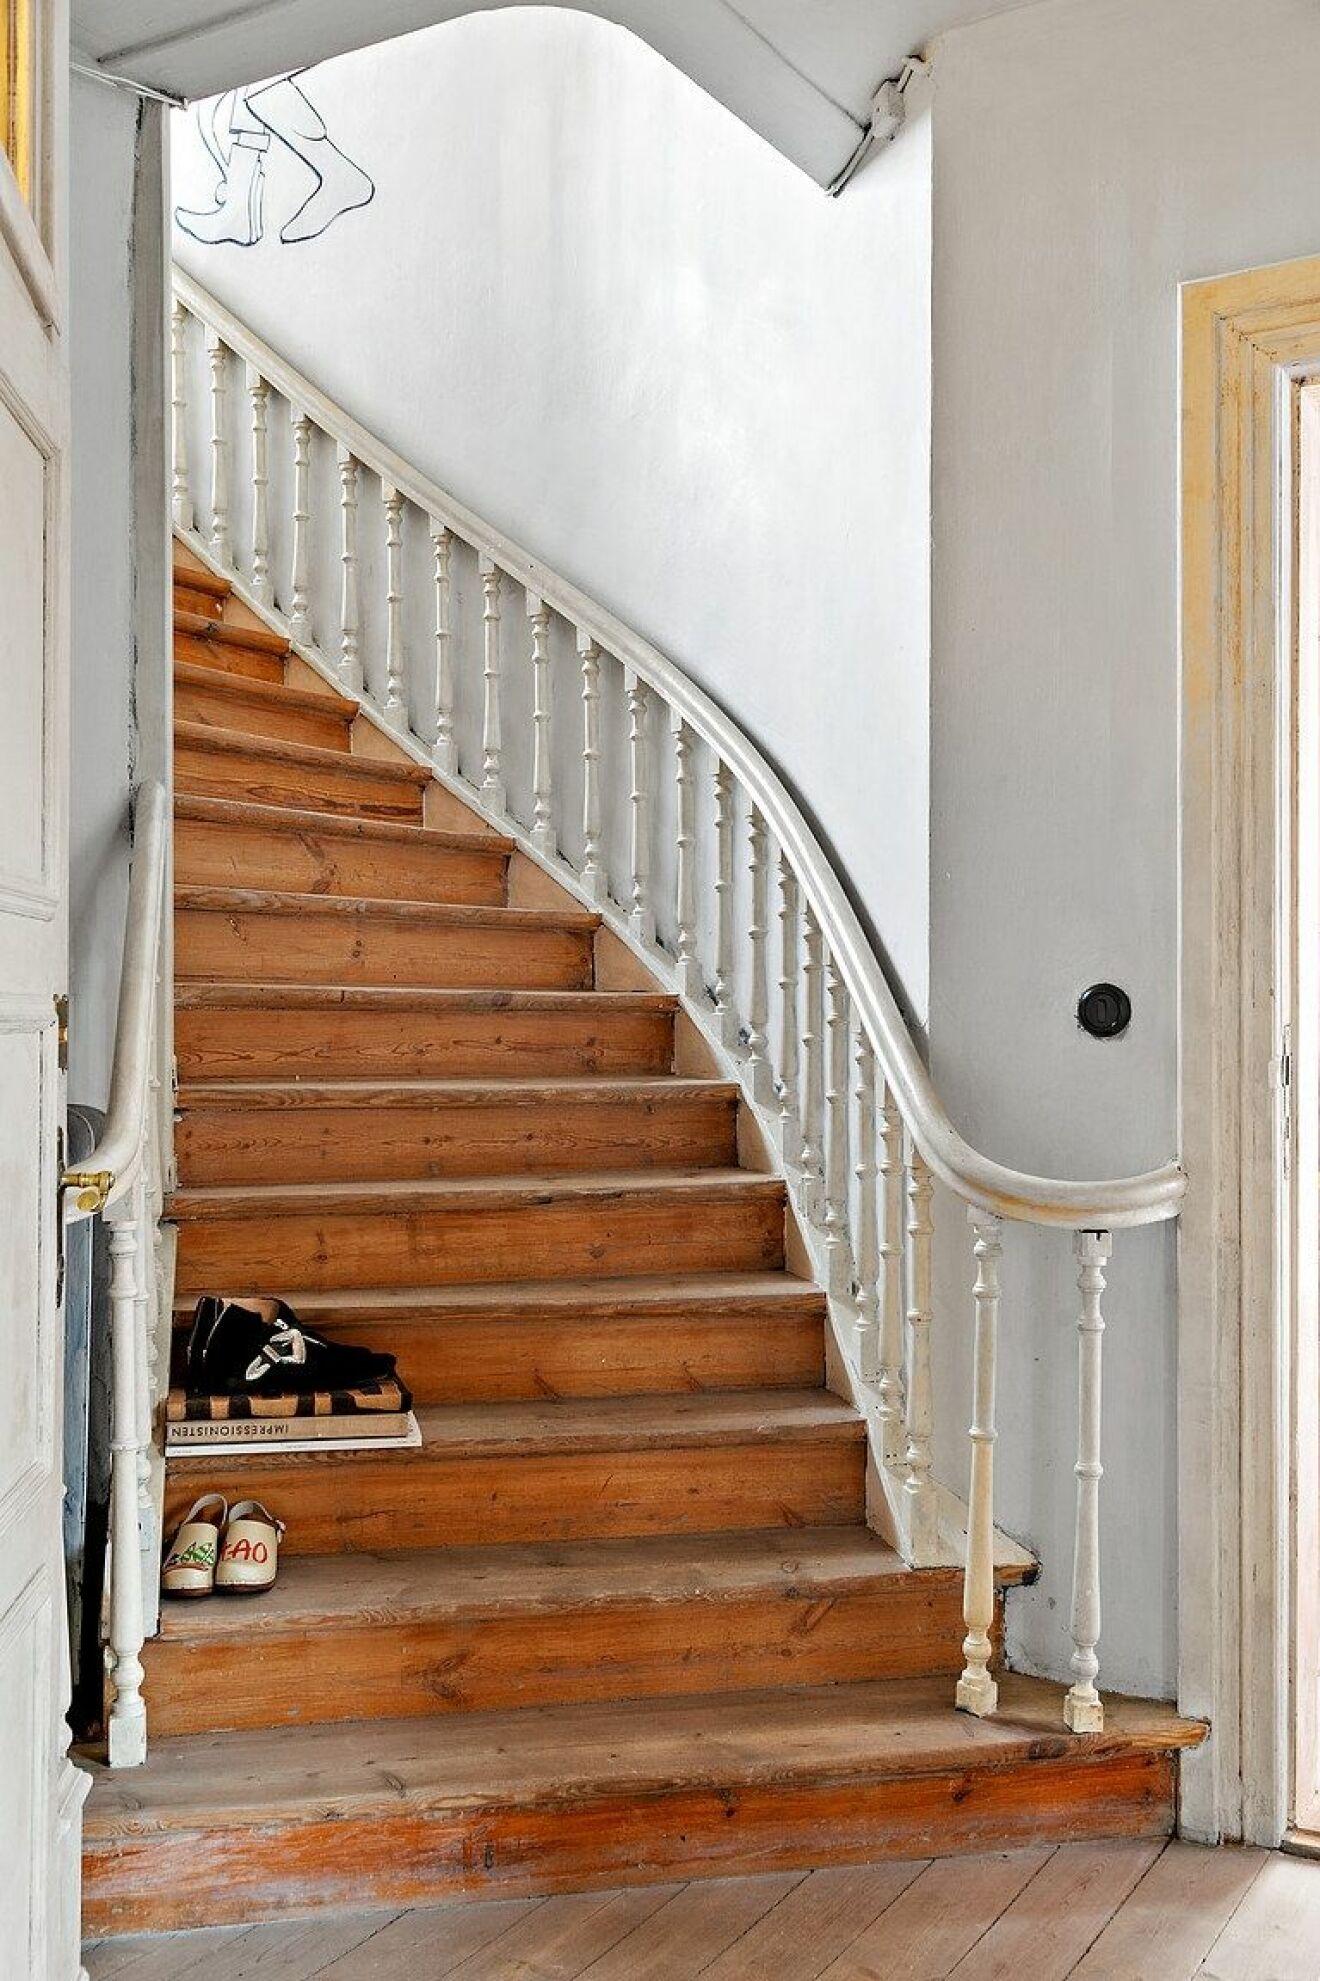 trappa i äldre stil